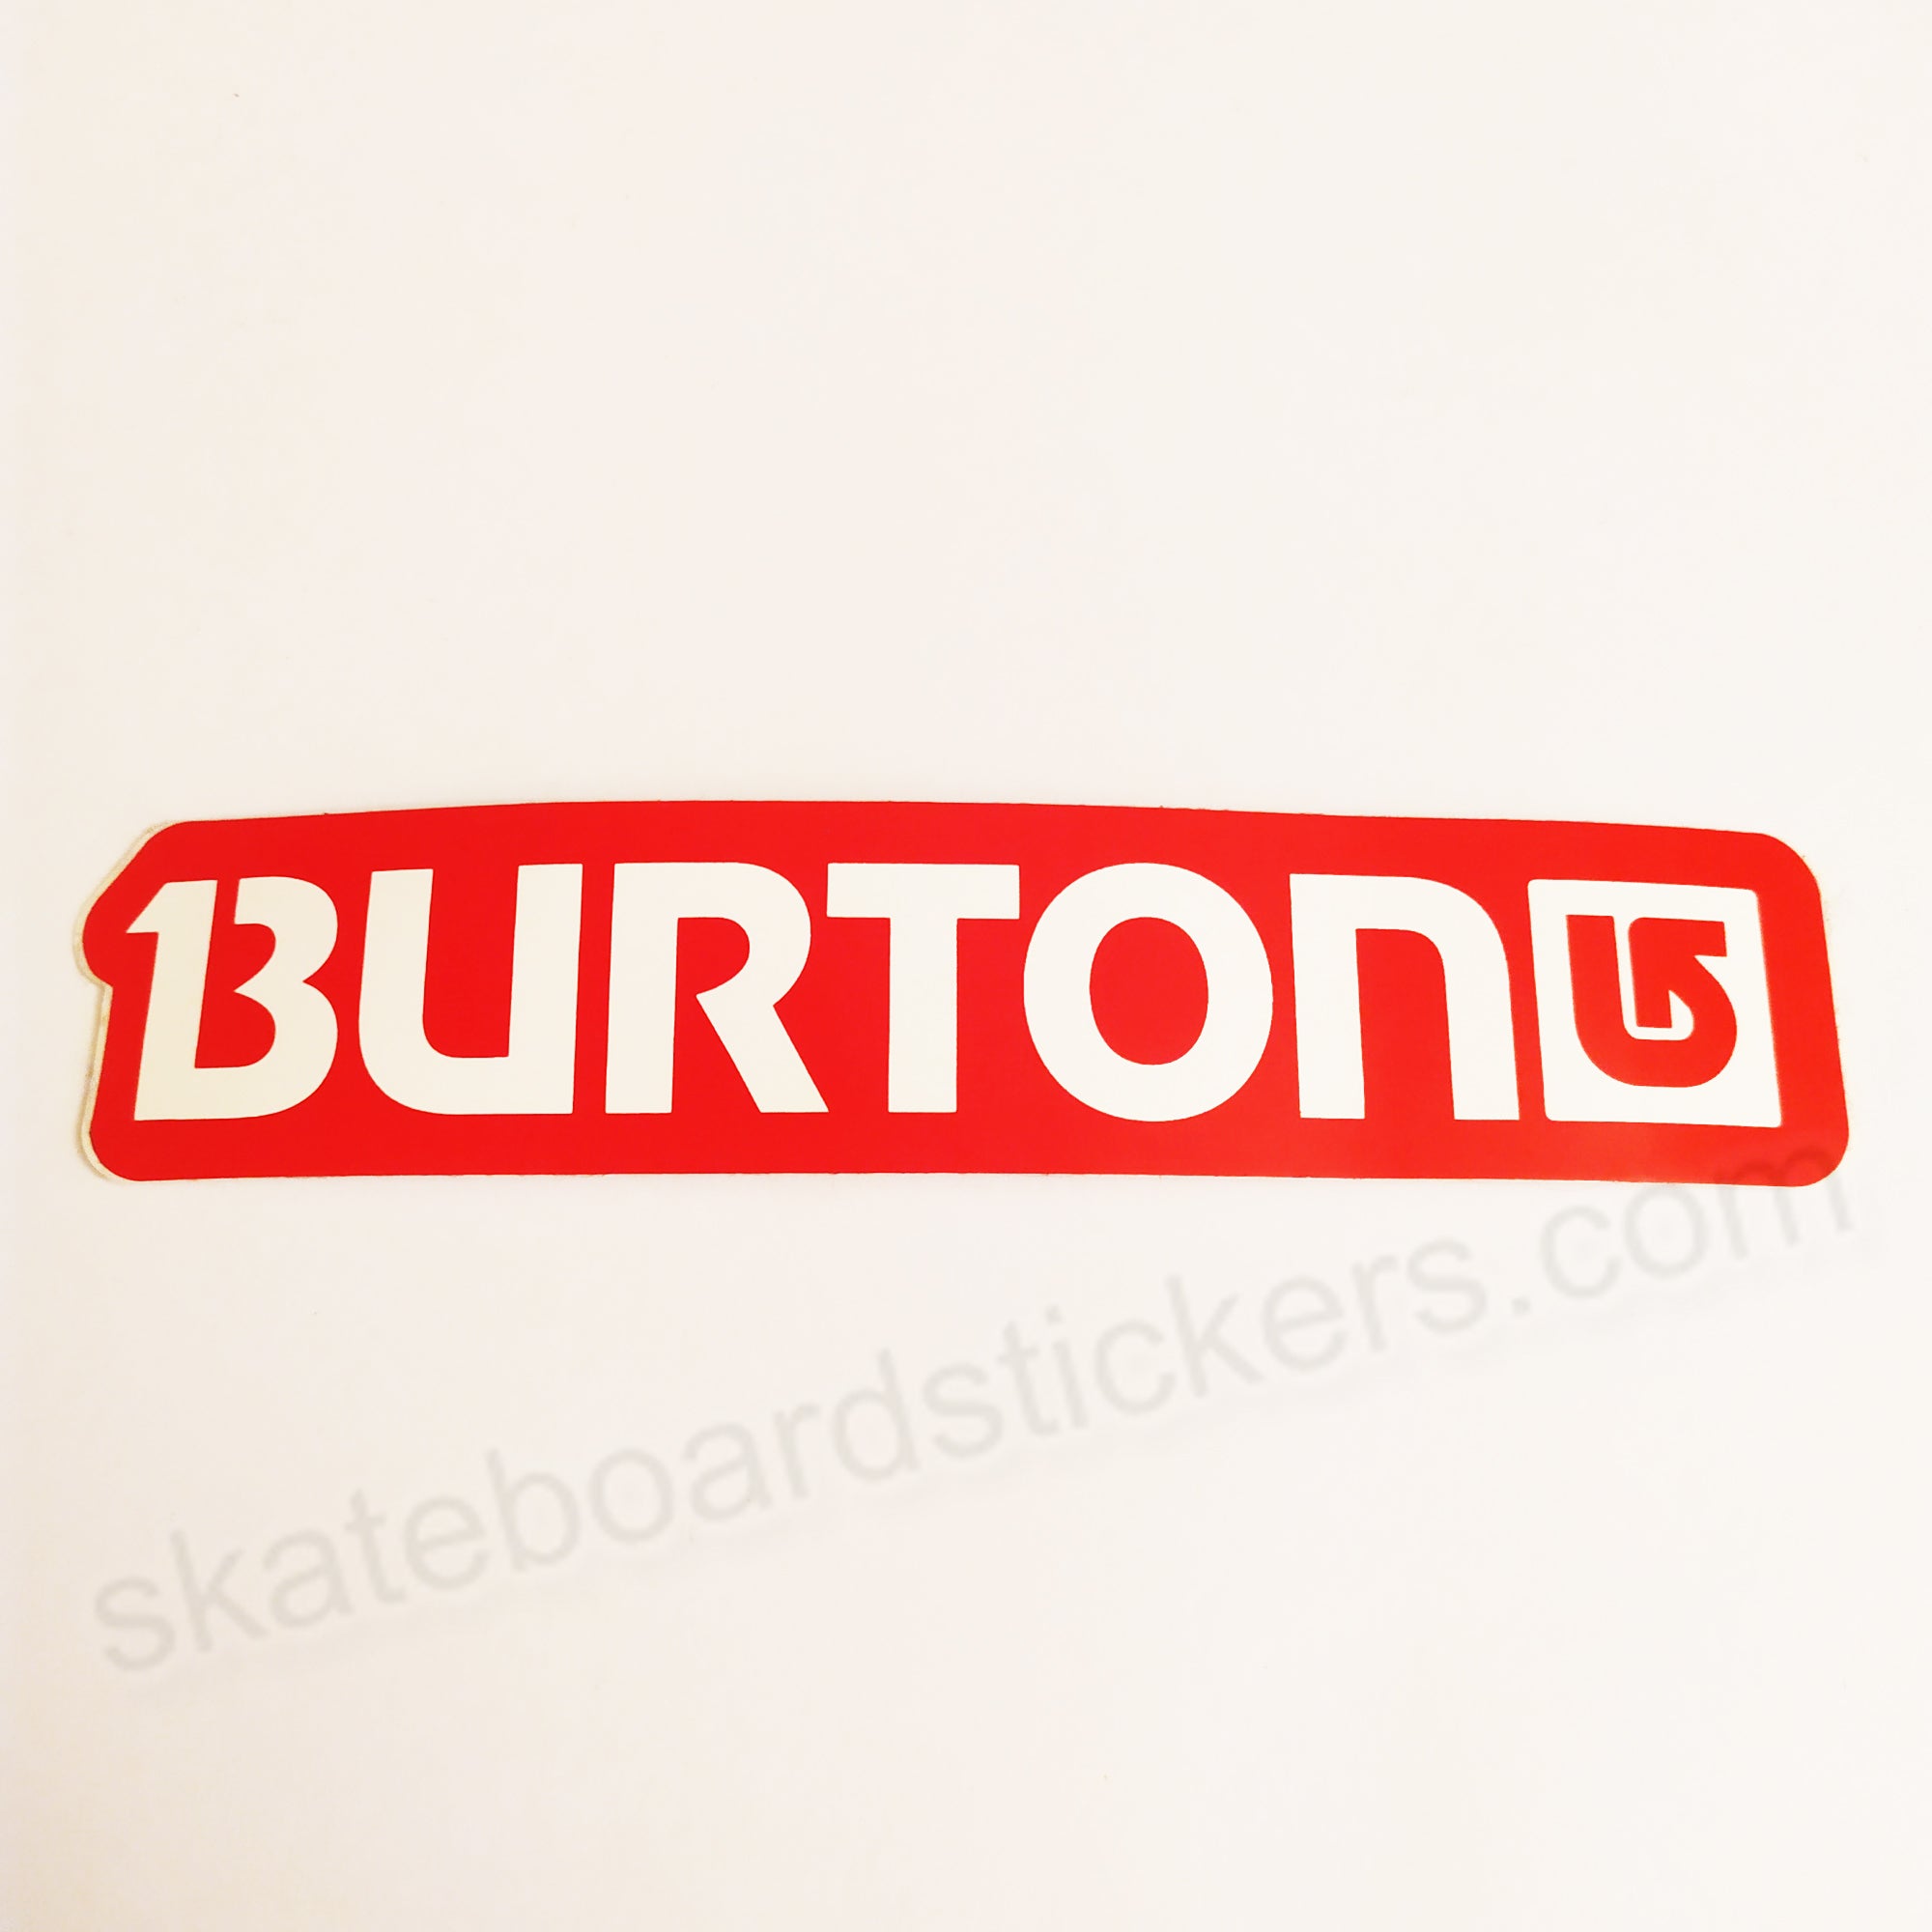 Burton Snowboards Sticker - red and white - SkateboardStickers.com